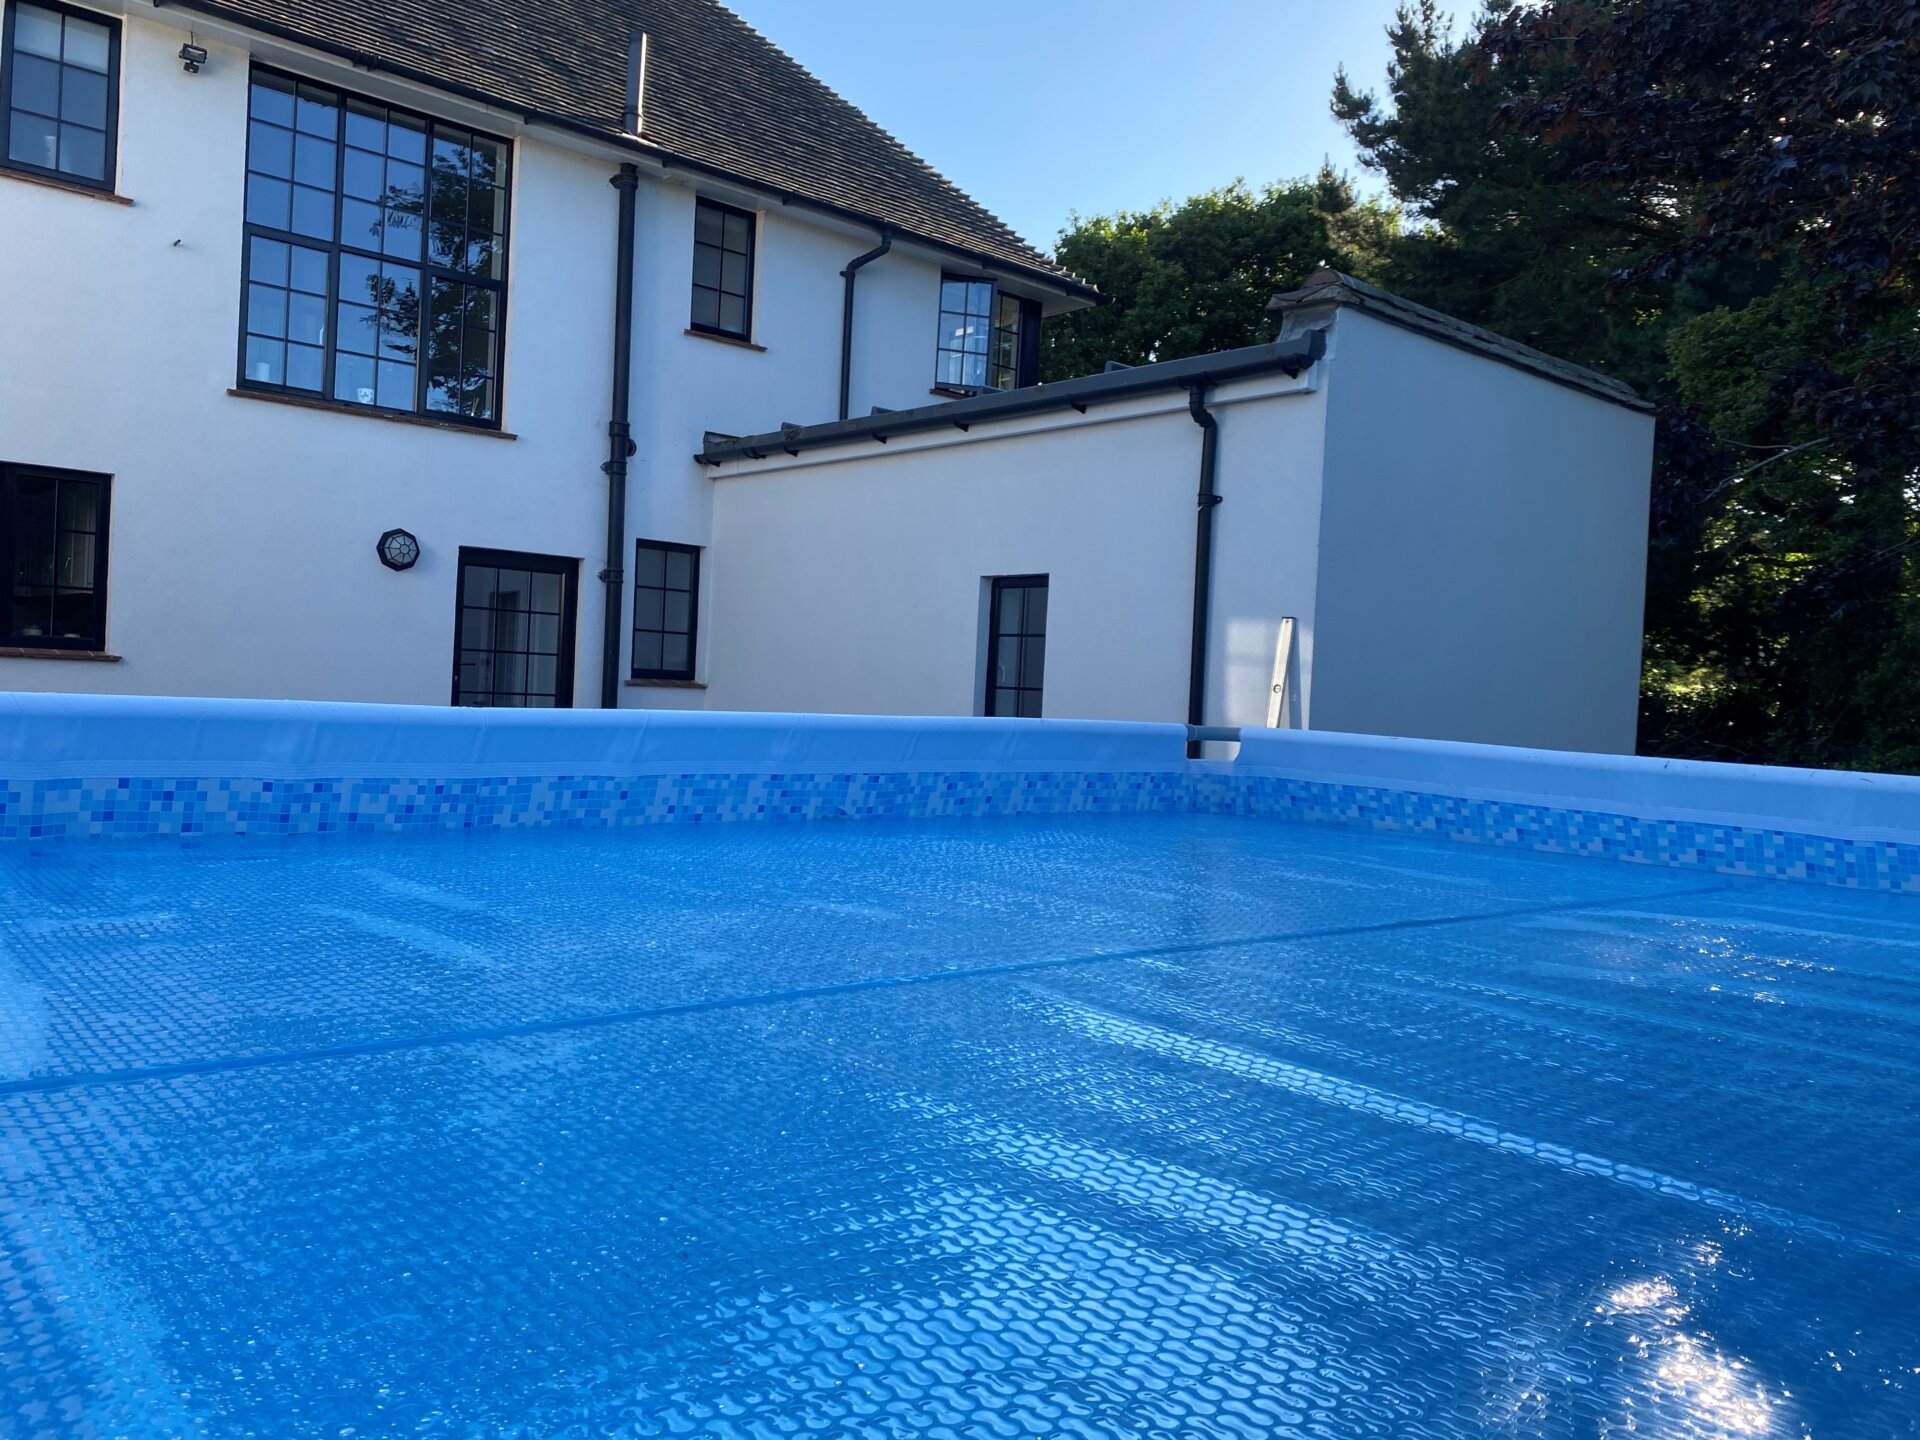 light blue geobubble cover on domestic pool